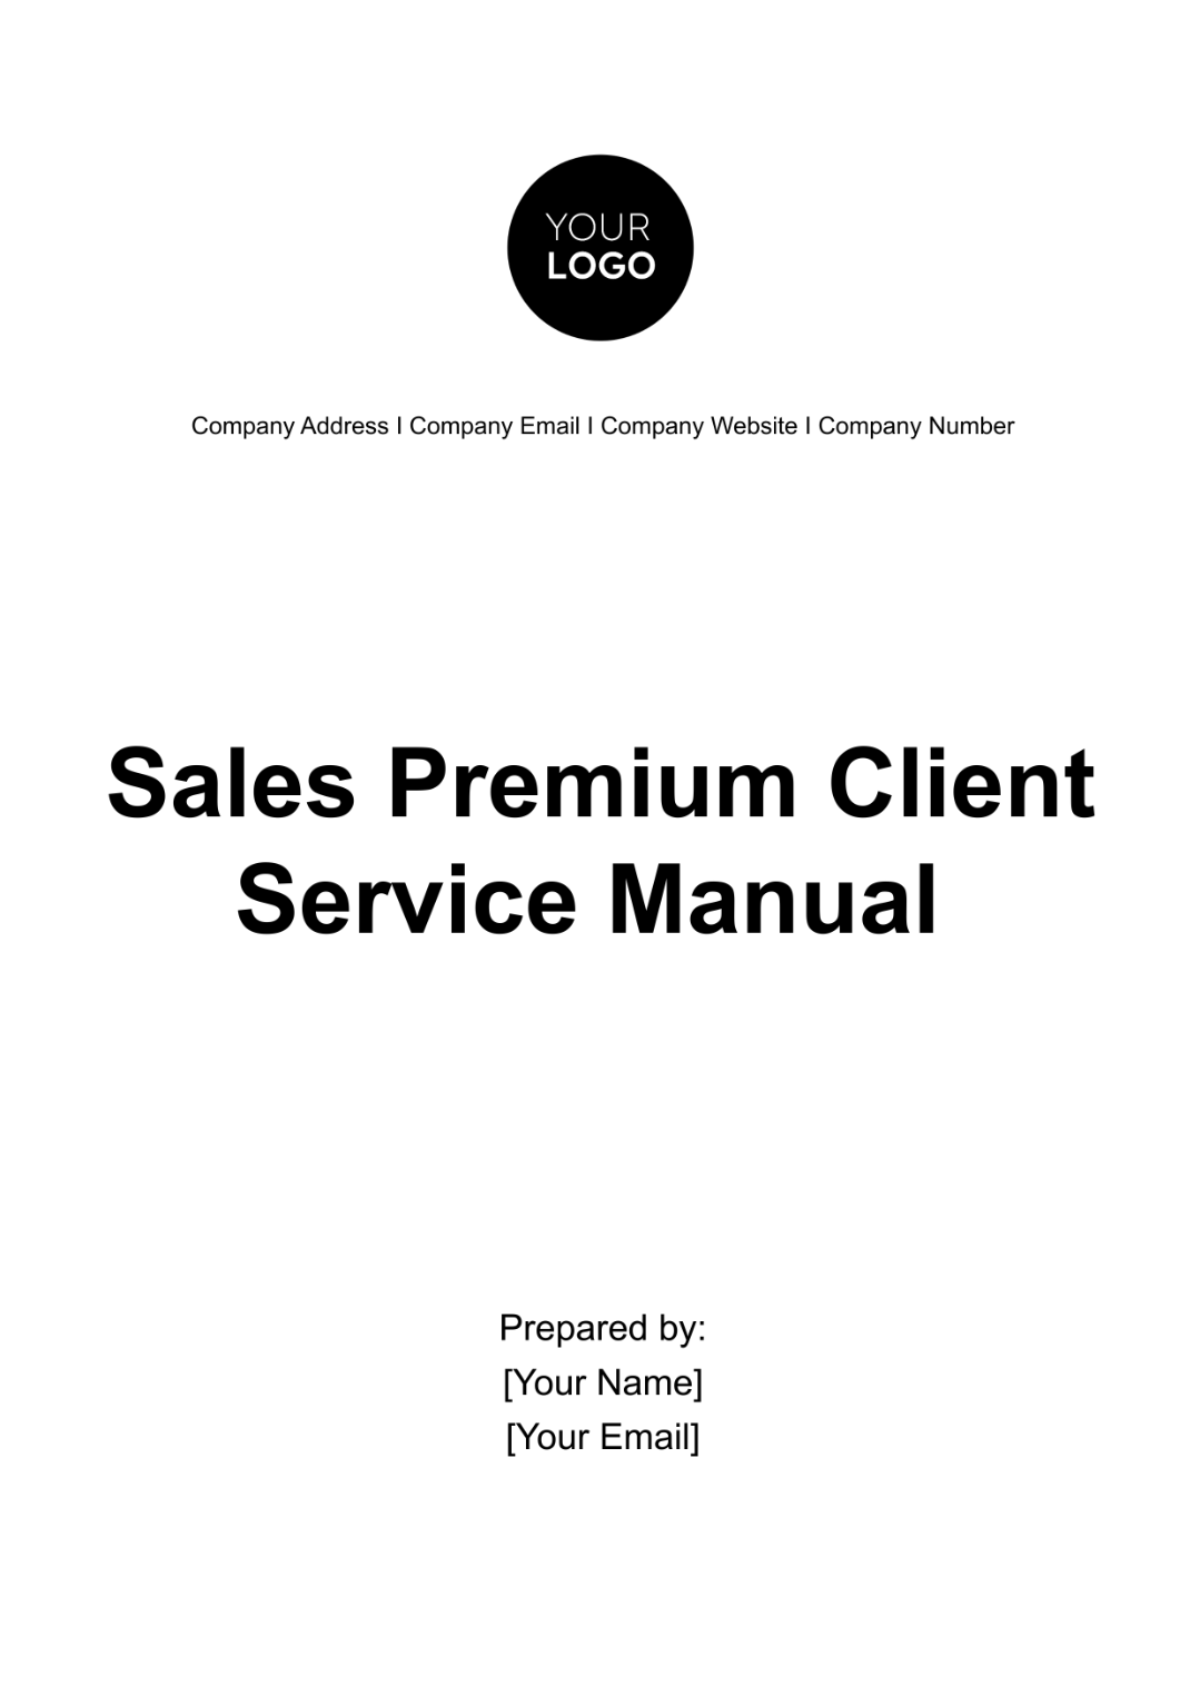 Free Sales Premium Client Service Manual Template